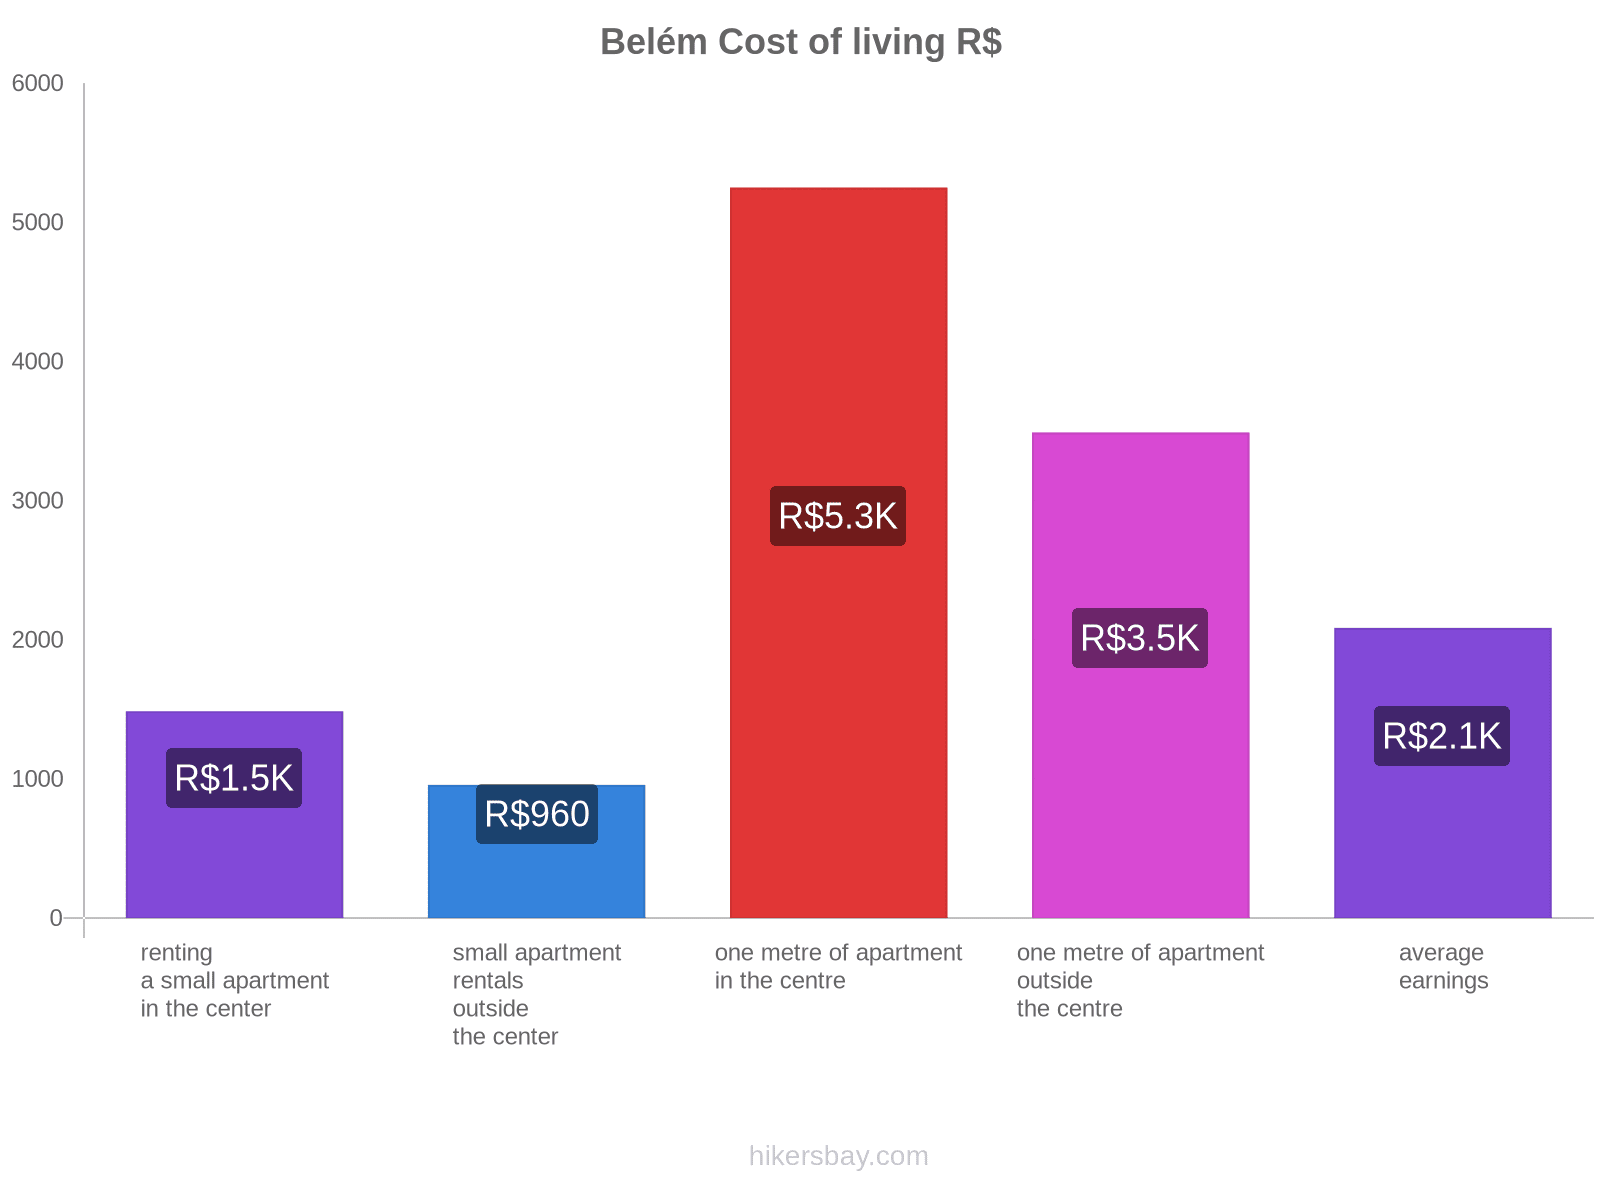 Belém cost of living hikersbay.com